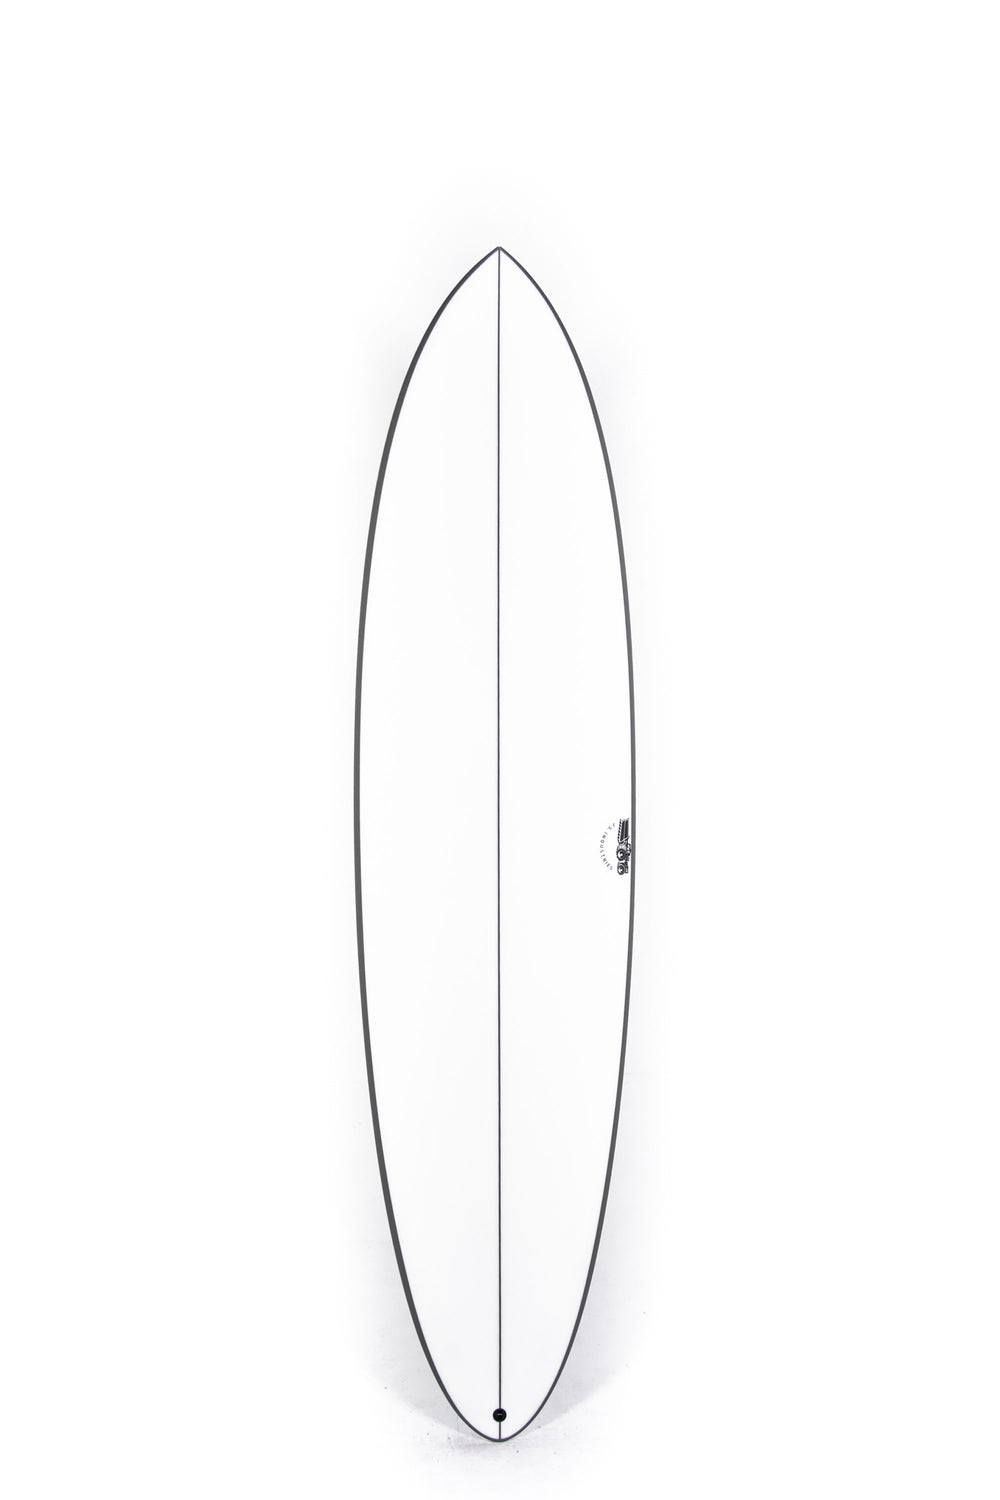 Pukas Surf Shop - JS Surfboards - EL BARON - 7'6